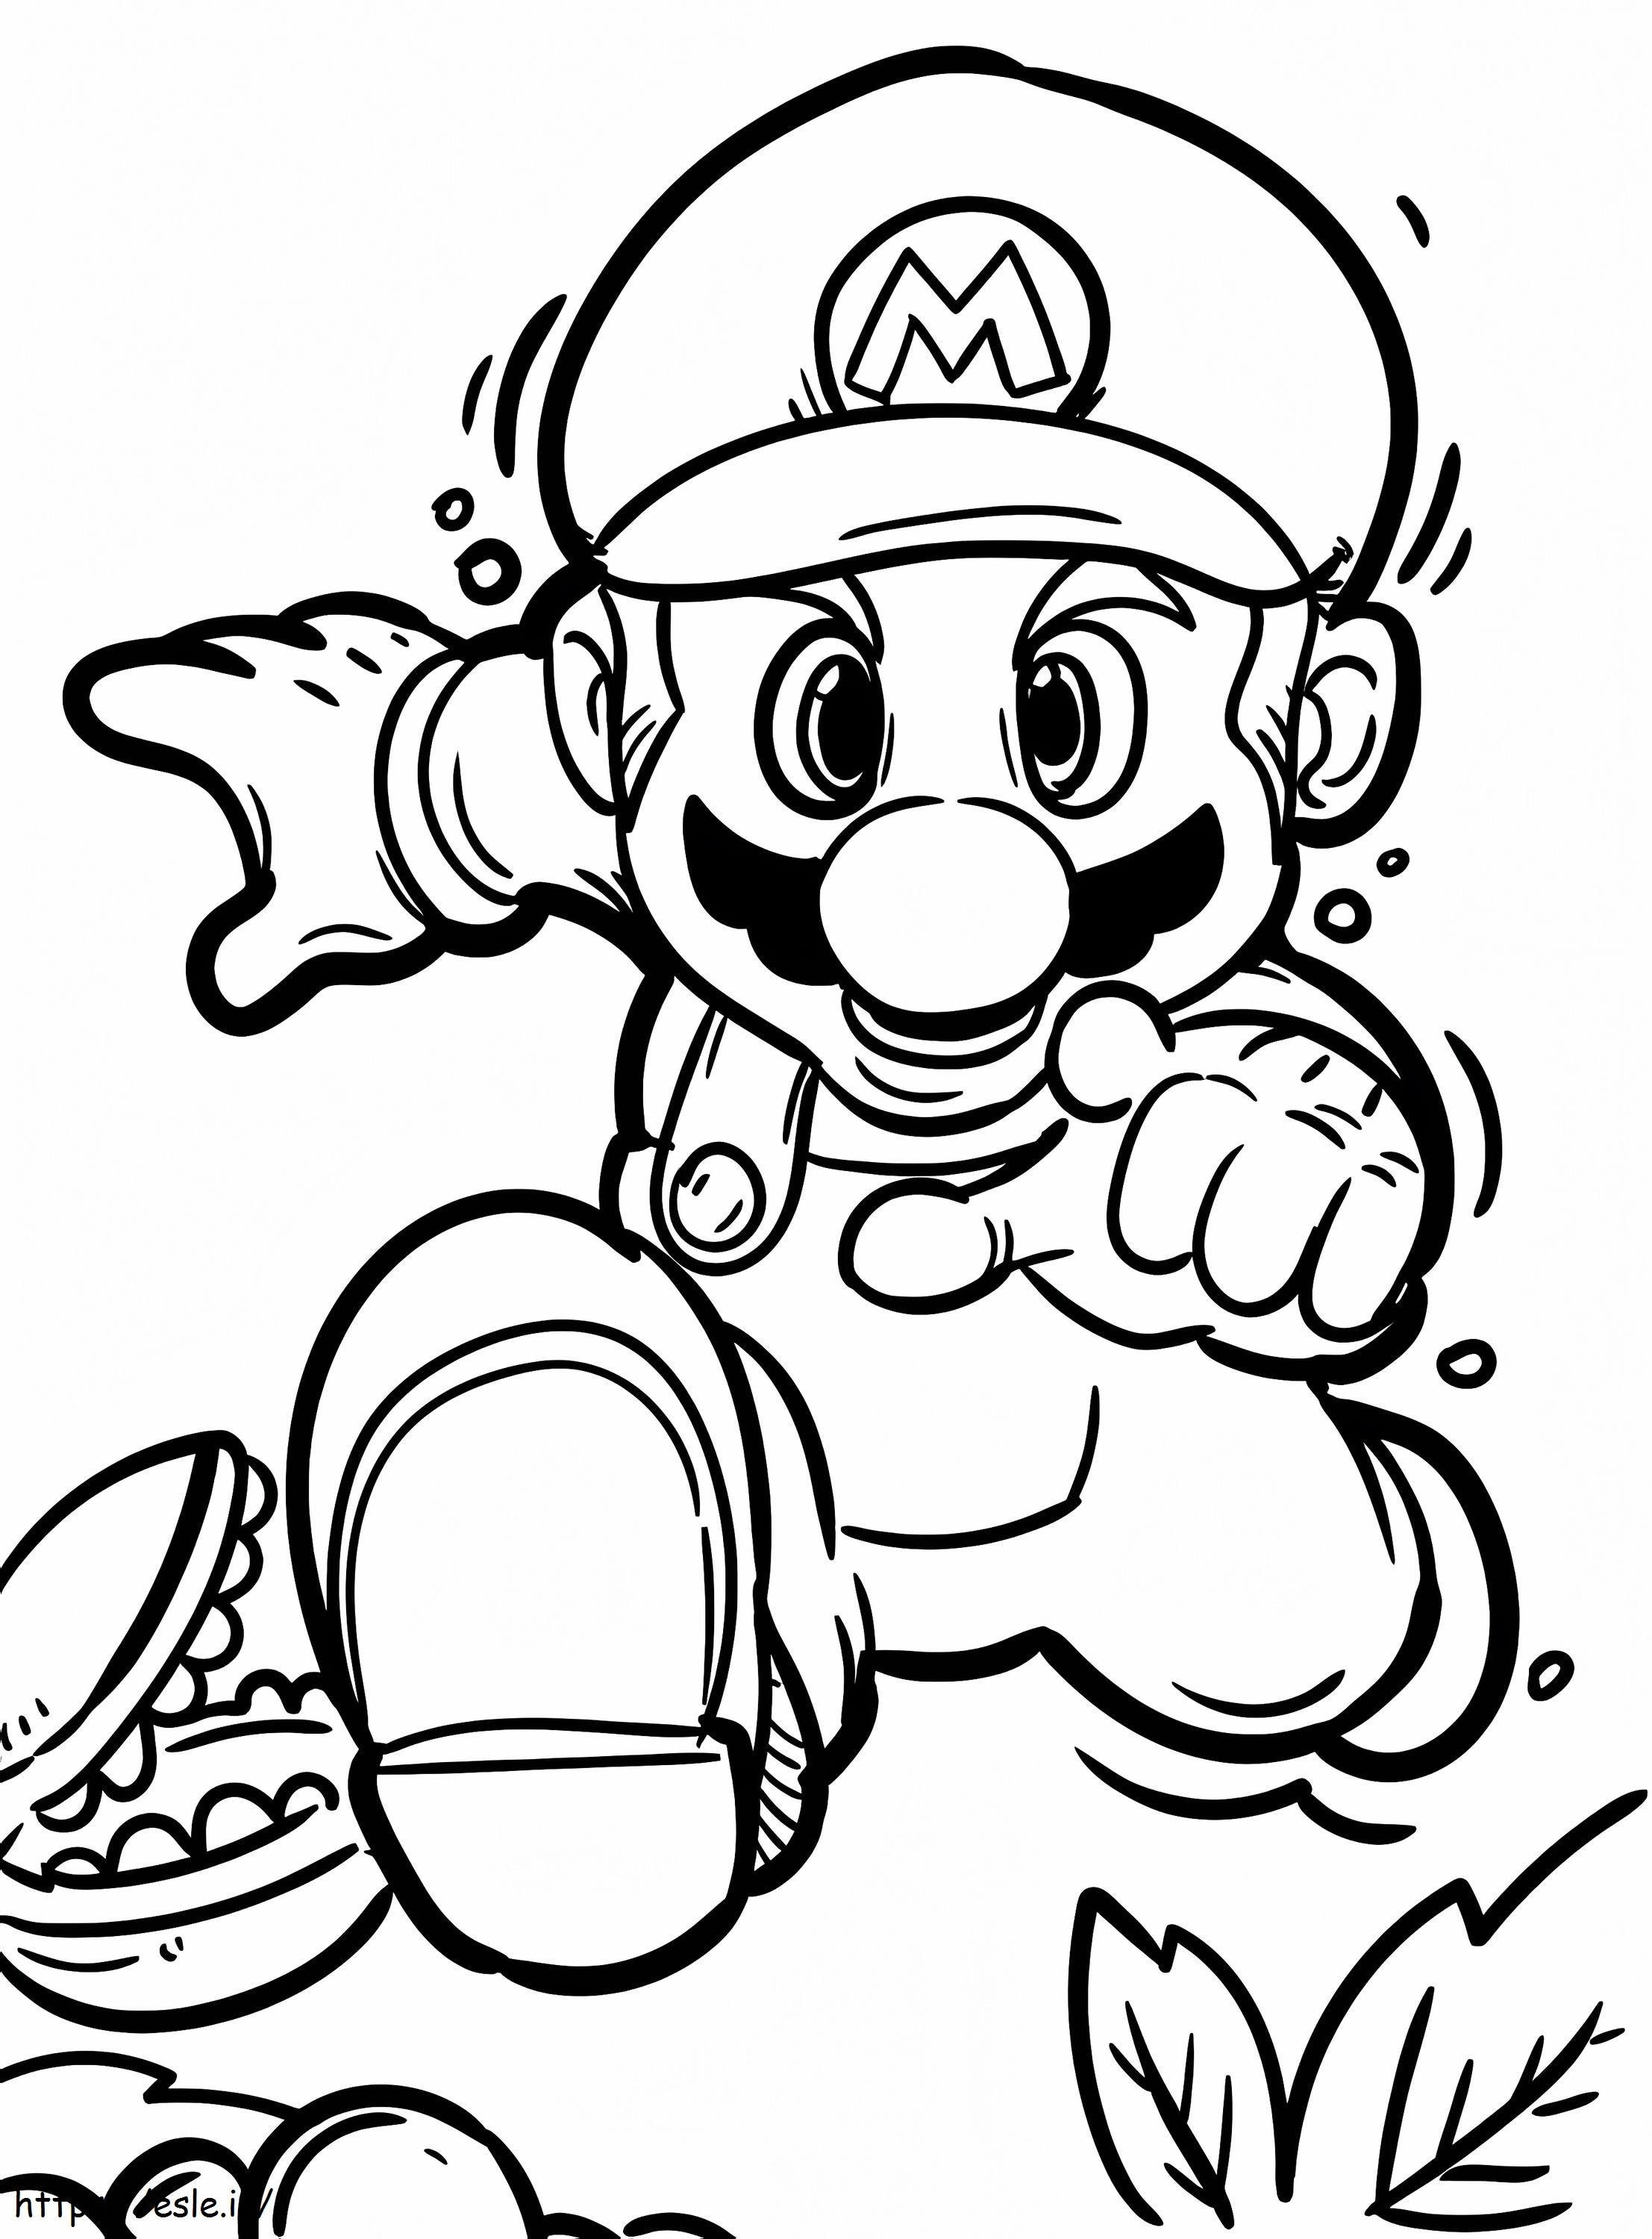 Cool Super Mario coloring page